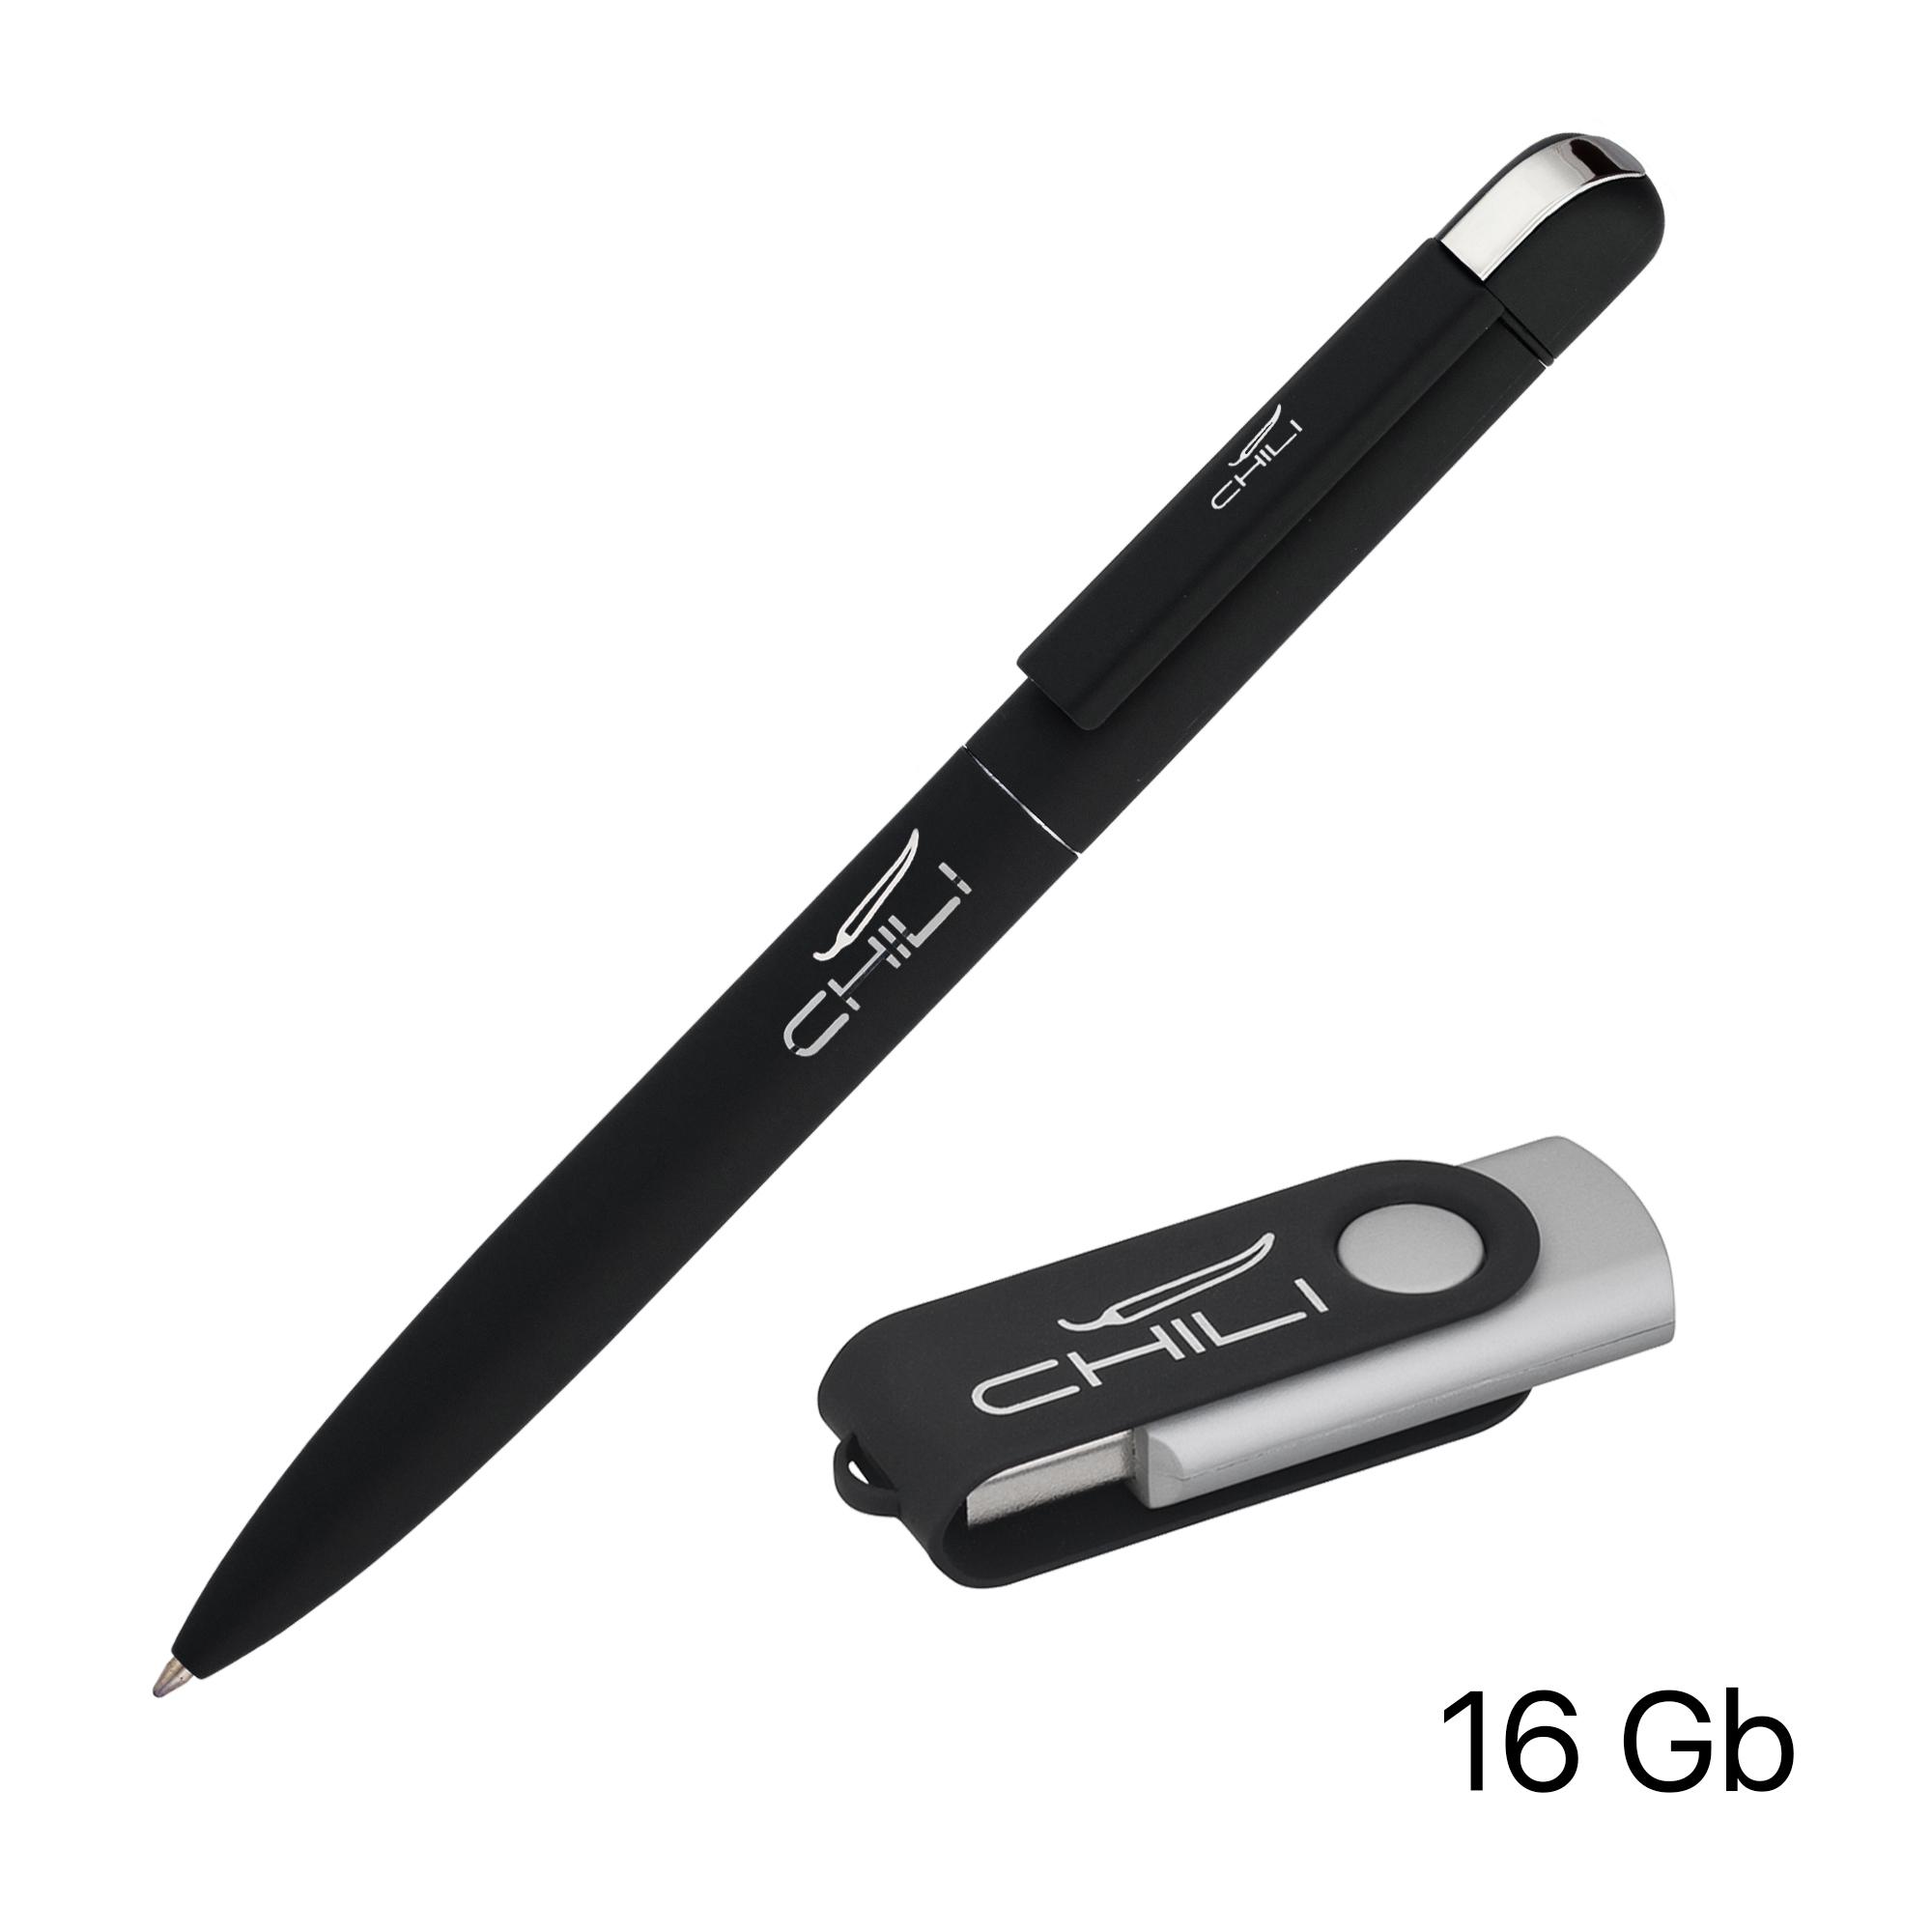 Набор ручка + флеш-карта 16 Гб в футляре, покрытие soft touch, цвет черный, фото 1